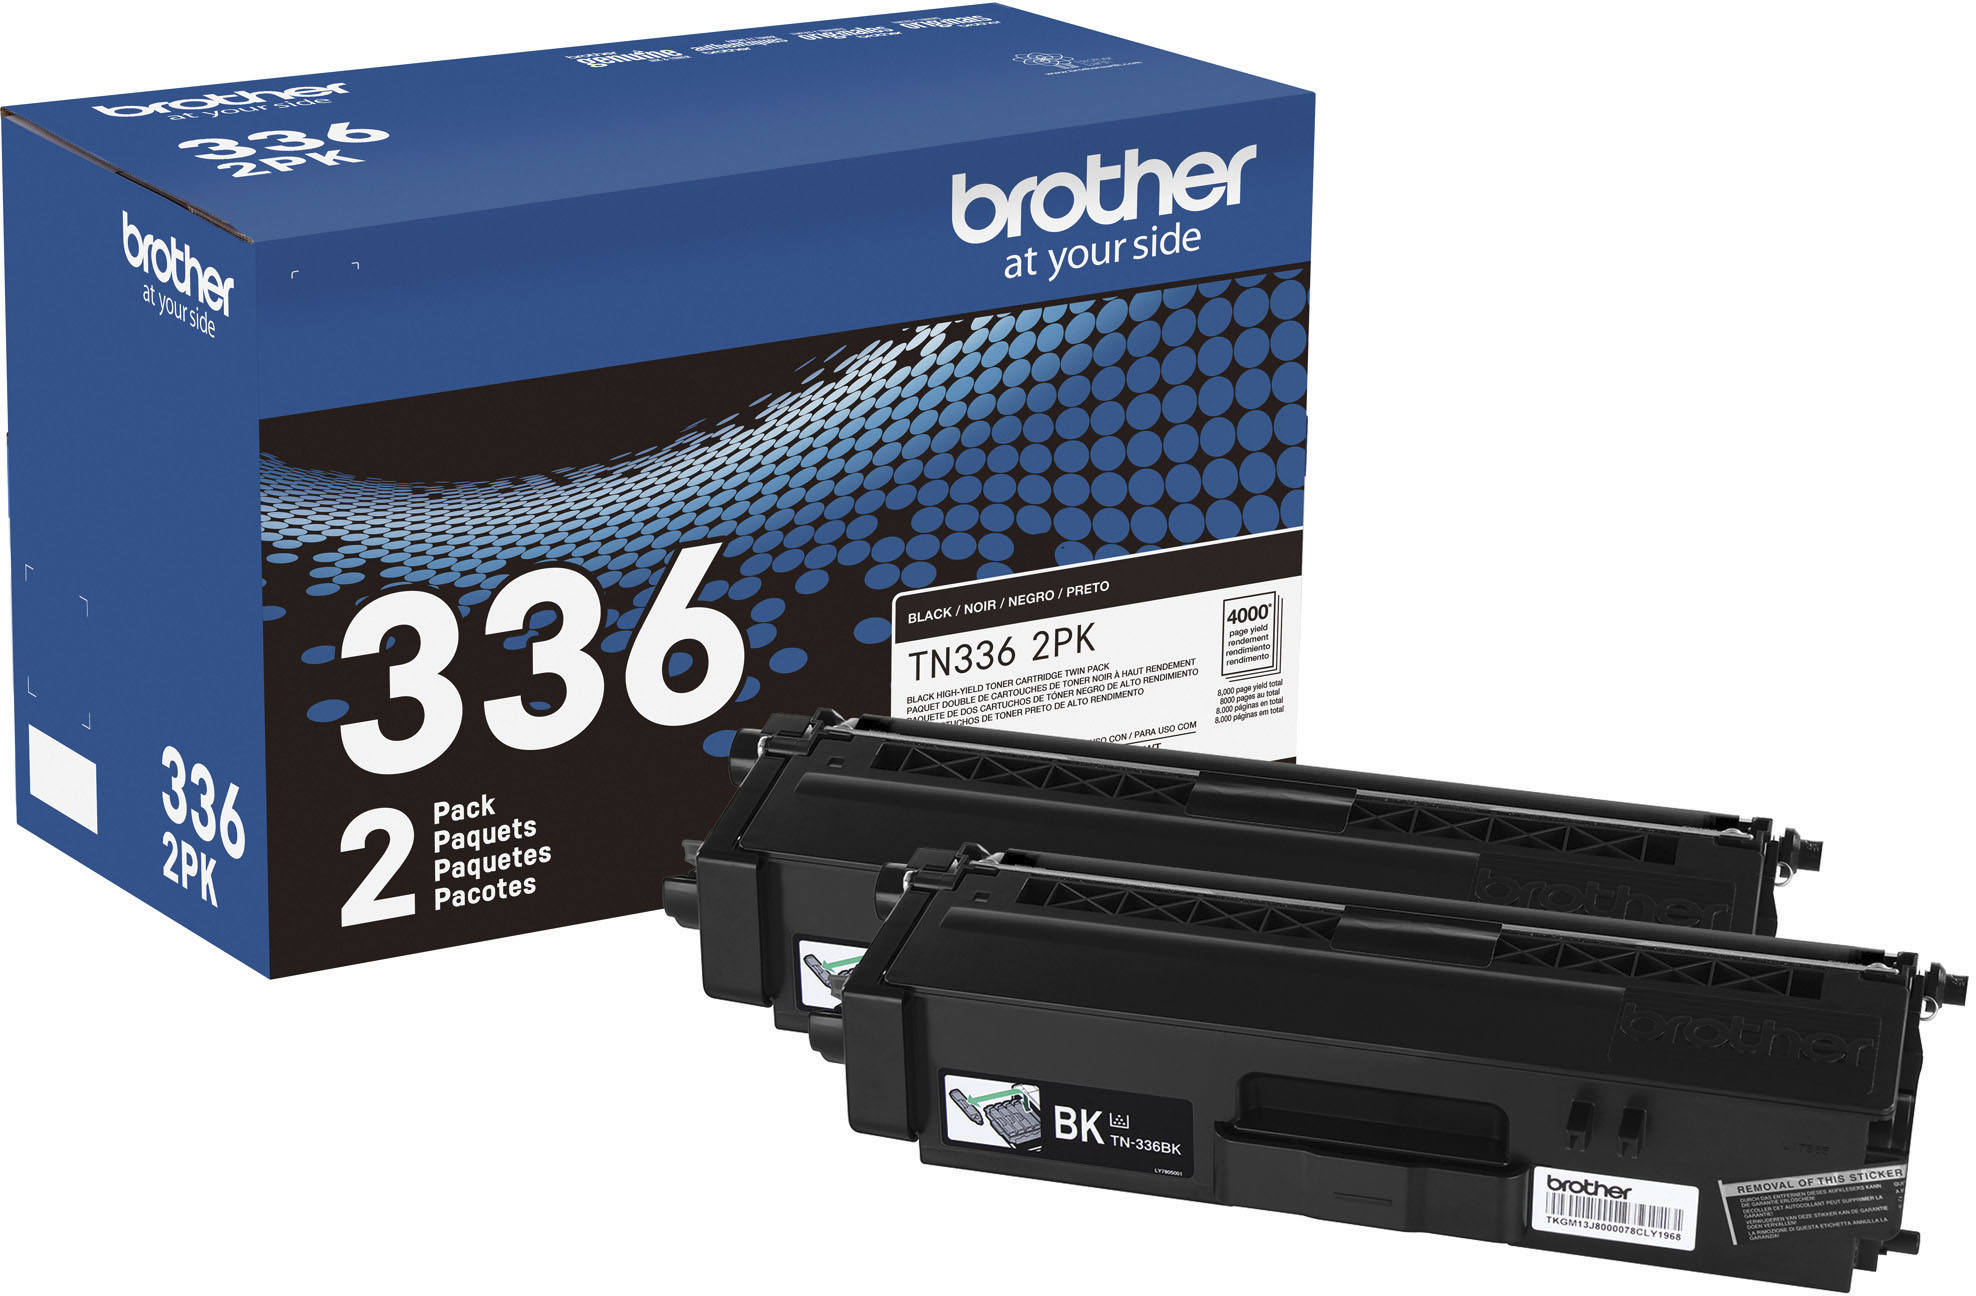 Brother - TN-336 2PK 2-Pack Standard Capacity - Black Toner Cartridges - Black